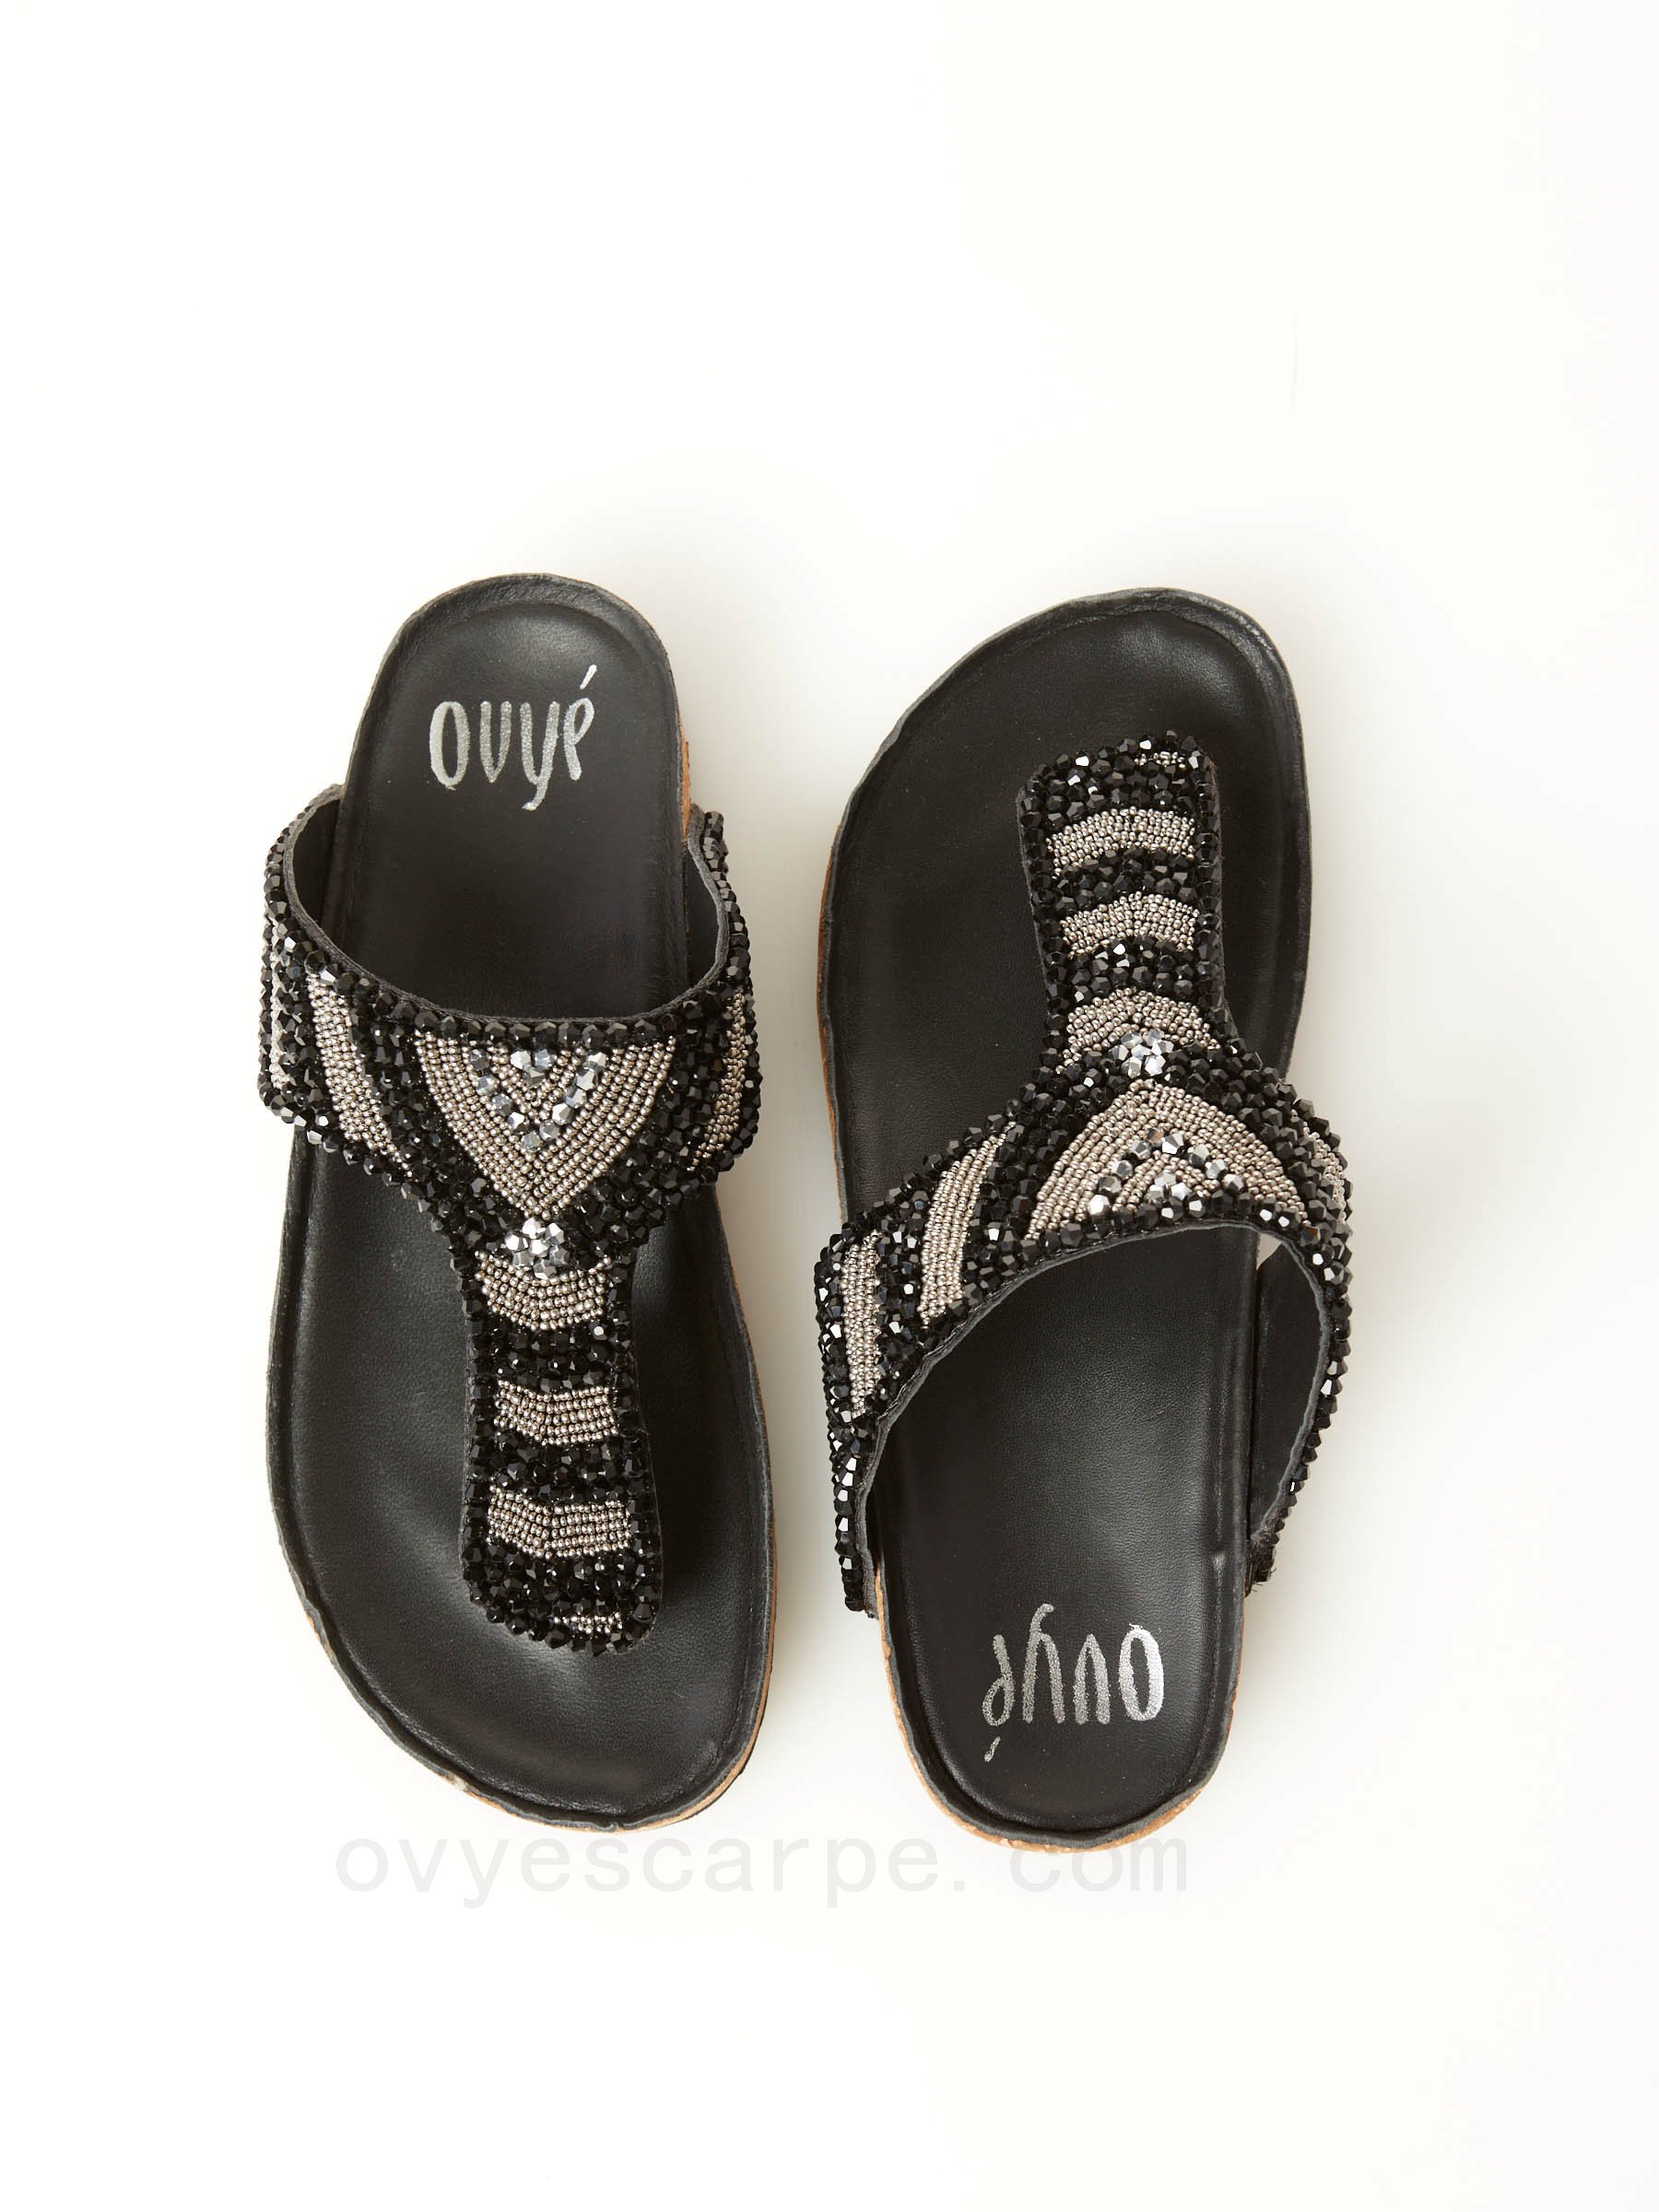 Flip Flop With Beads F08161027-0535 moda scarpe